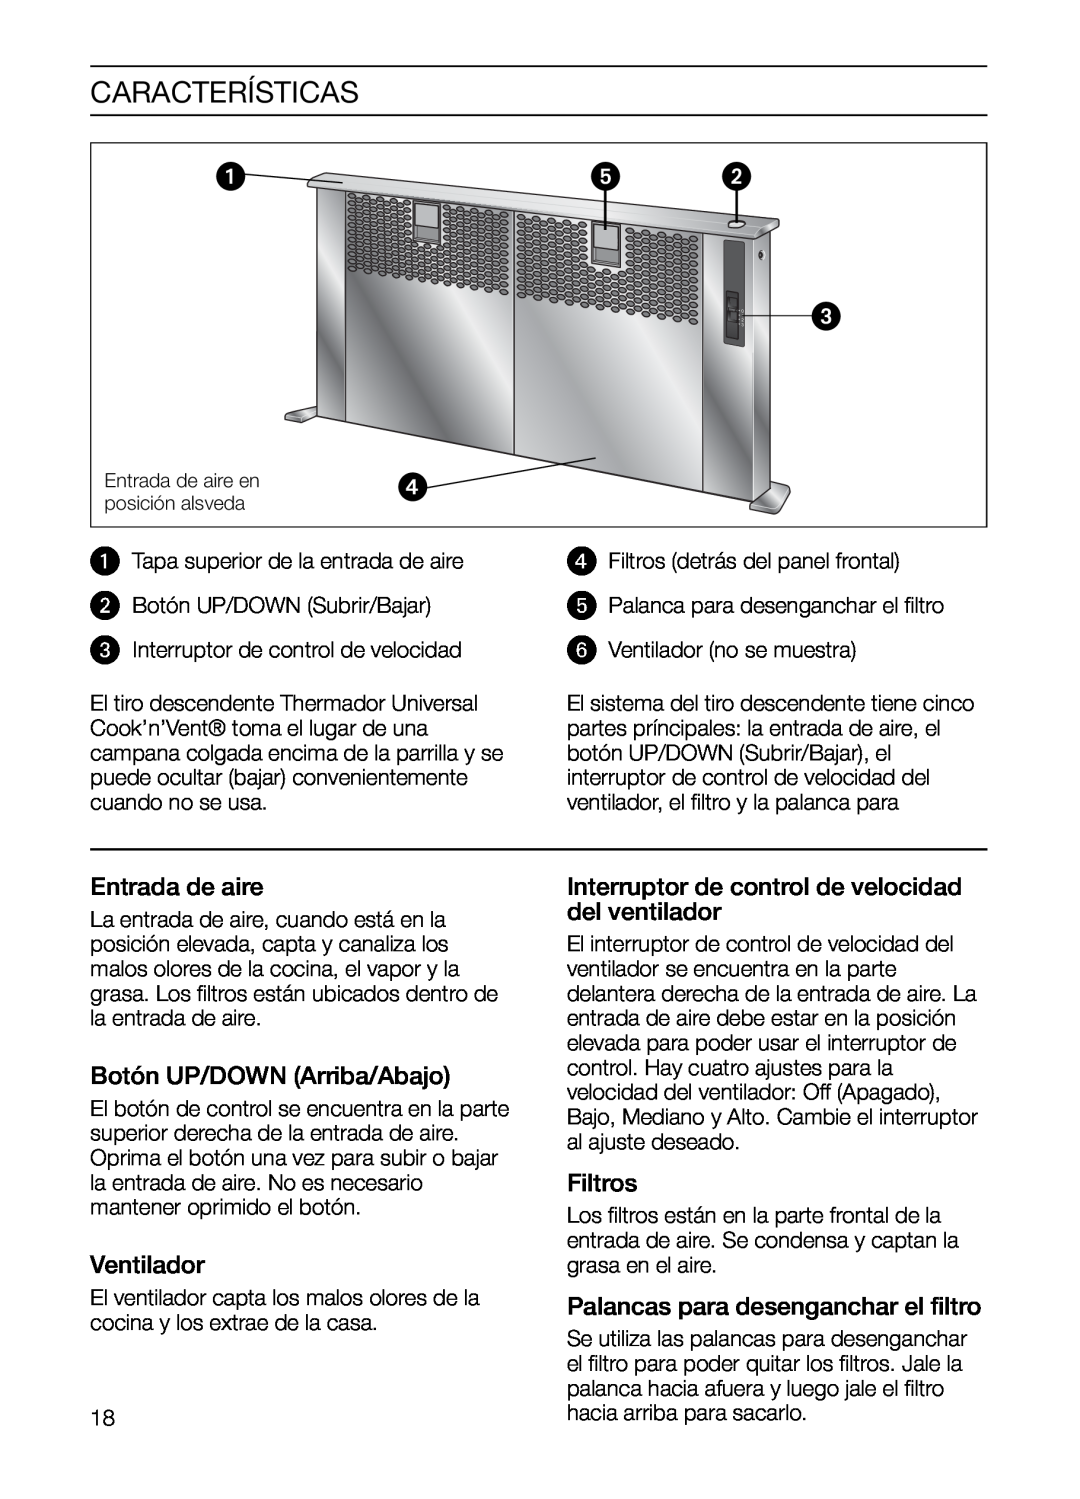 Bosch Appliances DHD Series manual Características, Entrada de aire, Botón UP/DOWN Arriba/Abajo, Ventilador, Filtros 